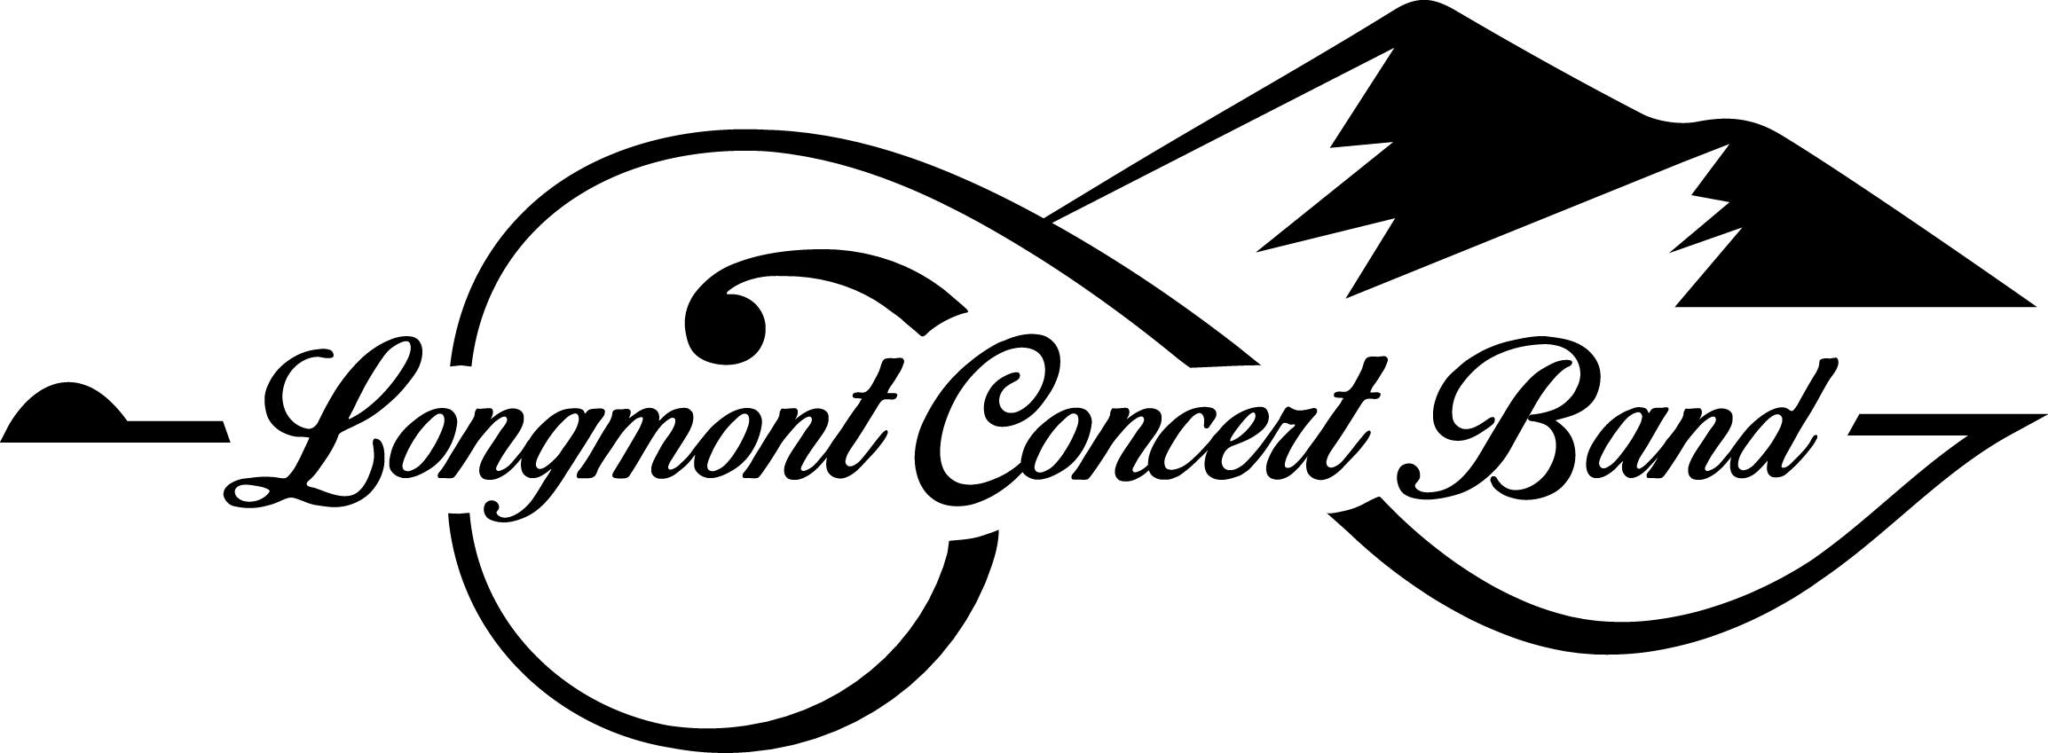 Longmont Concert Band logo